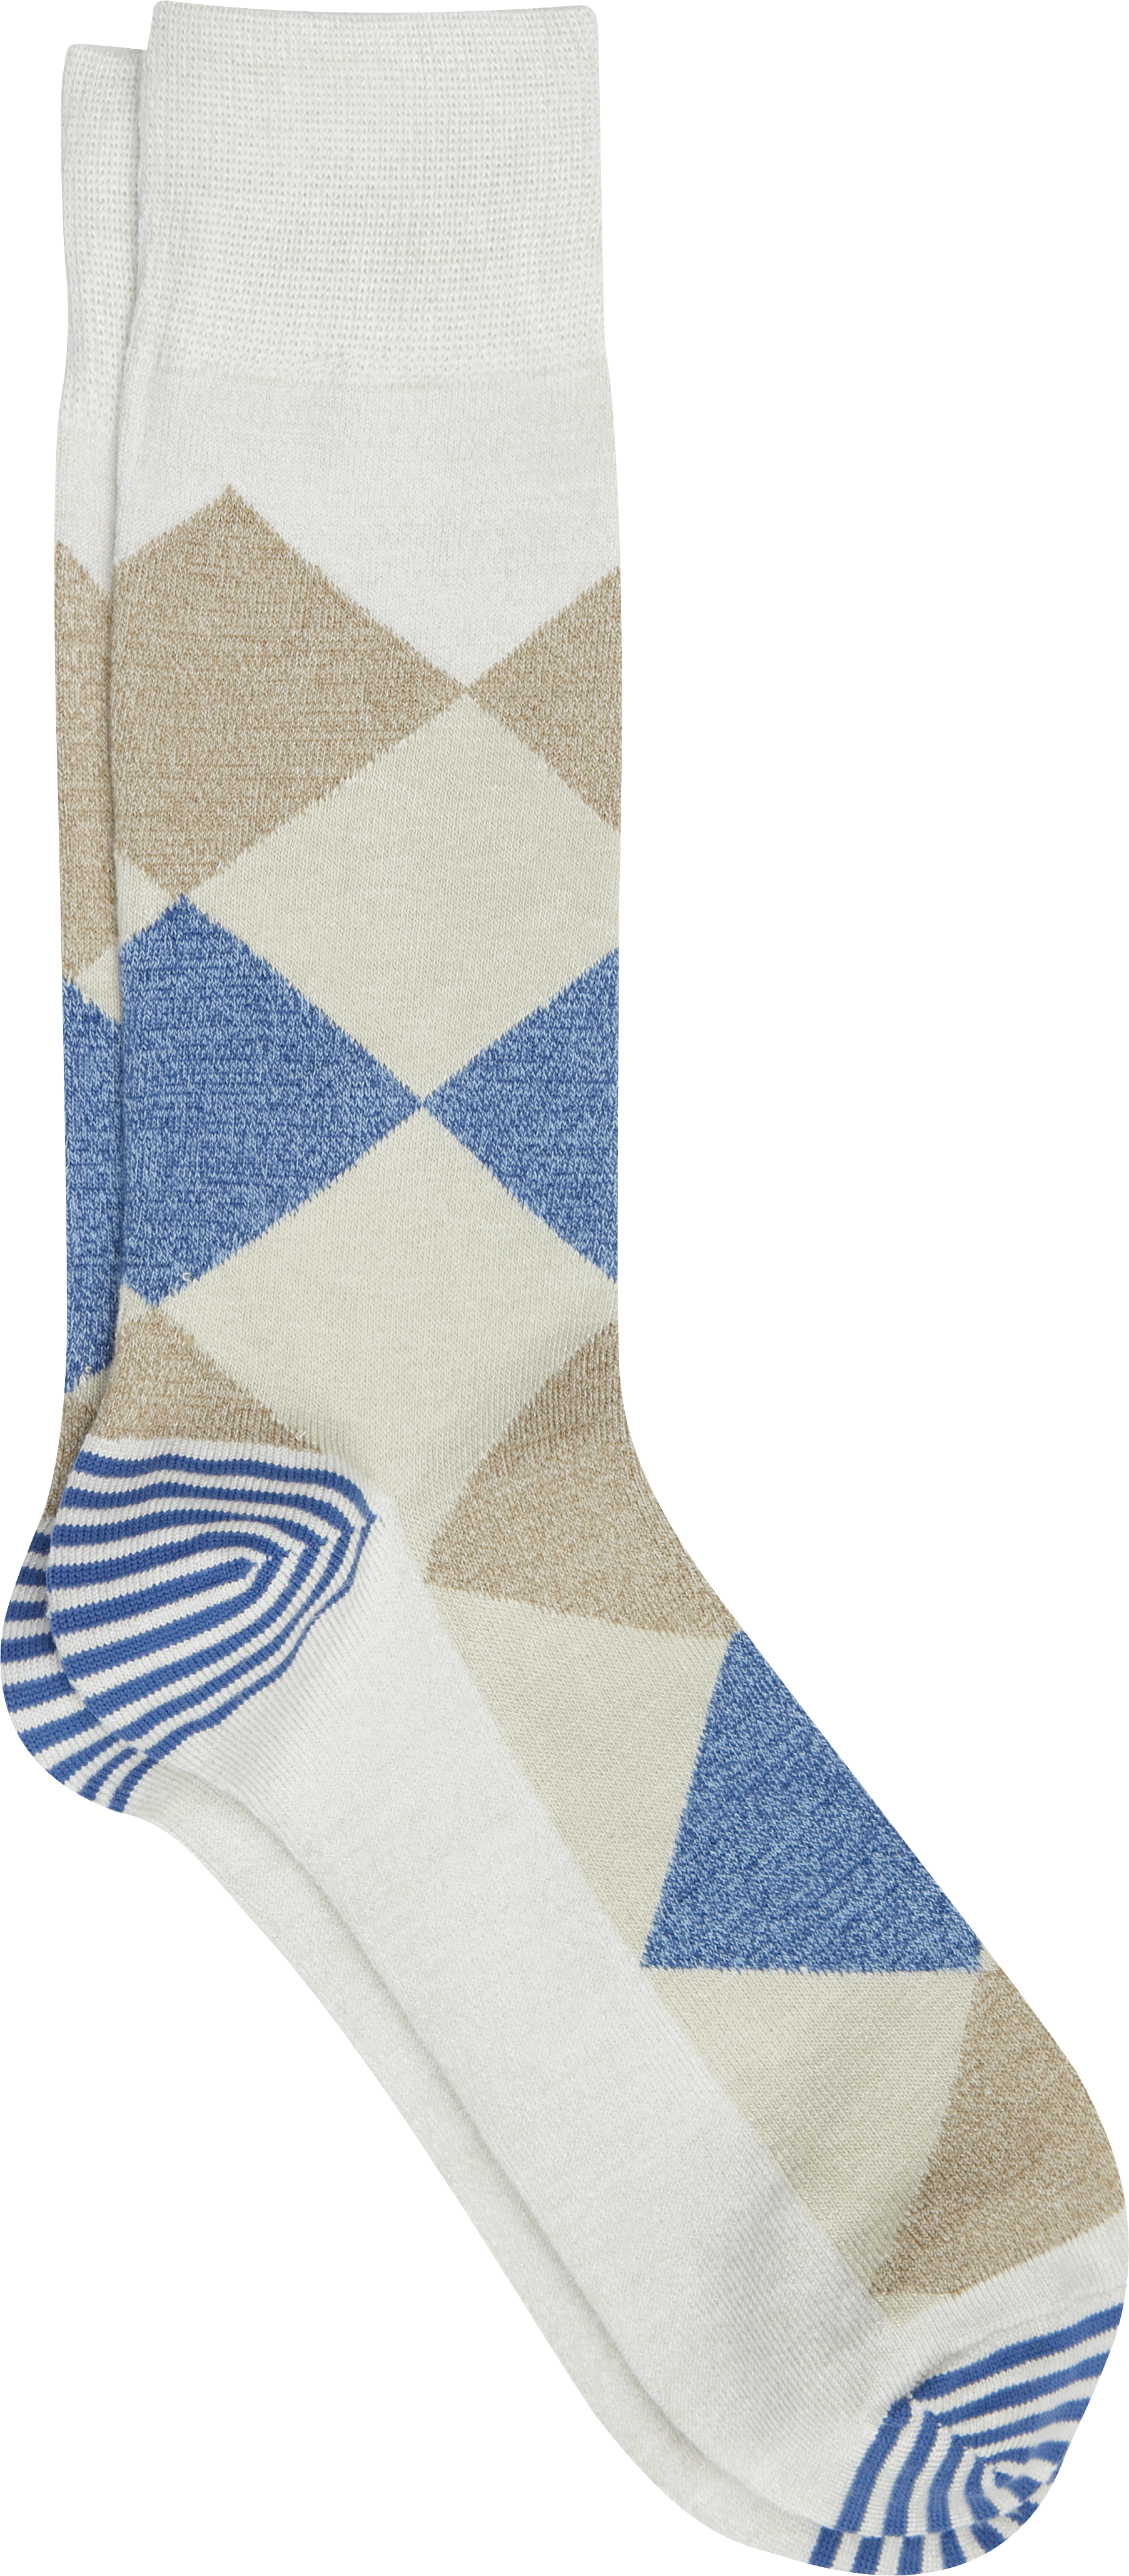 Pronto Uomo Socks, Taupe Twisted Argyle - Men's Accessories | Men's ...